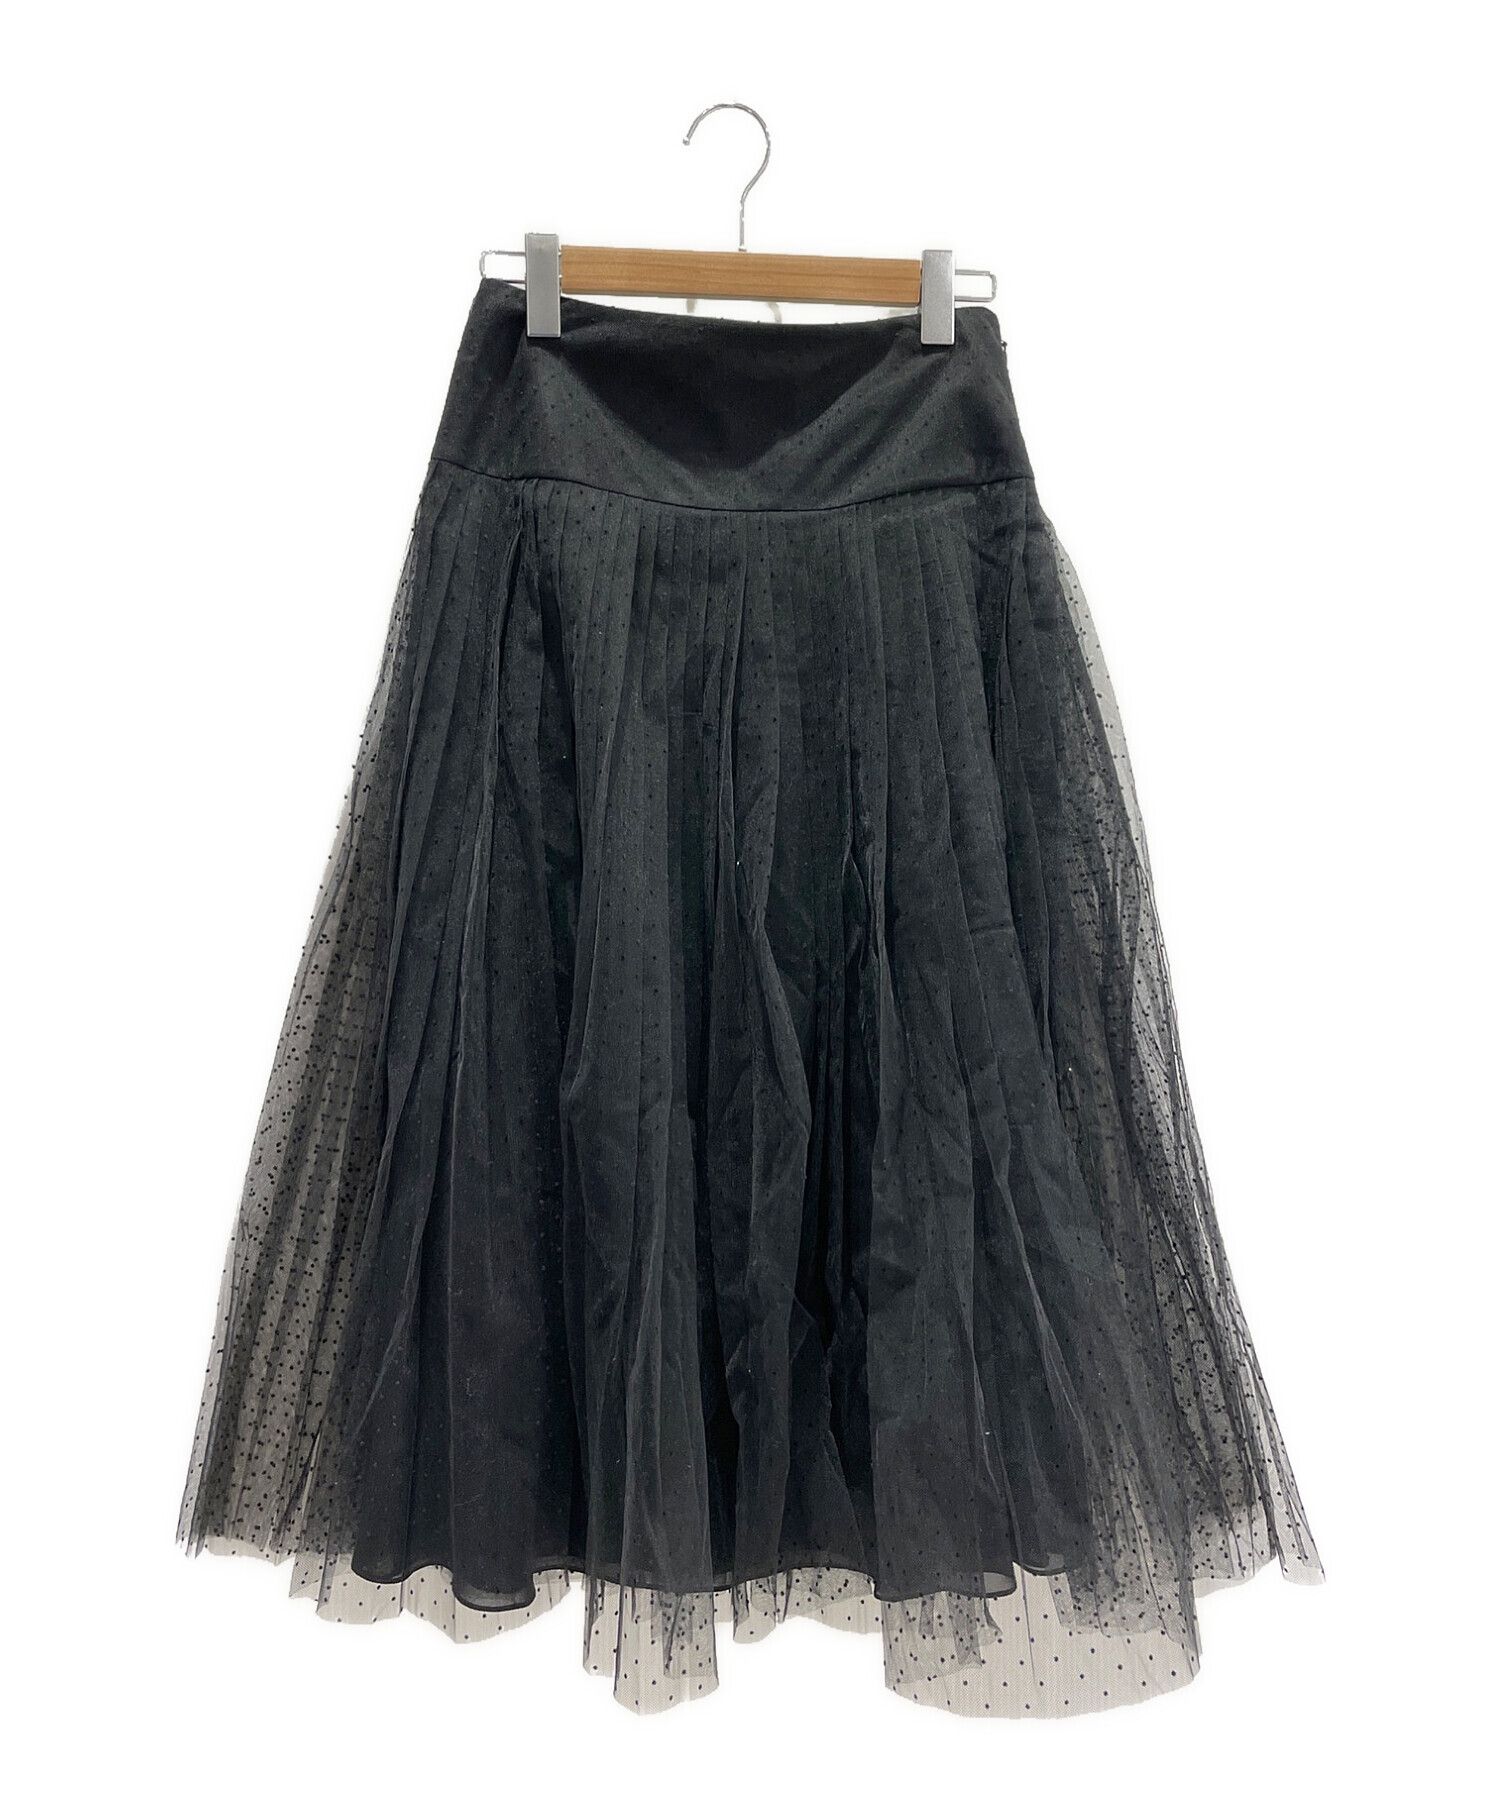 Christian Dior (クリスチャン ディオール) チュールドットスカート ブラック サイズ:38